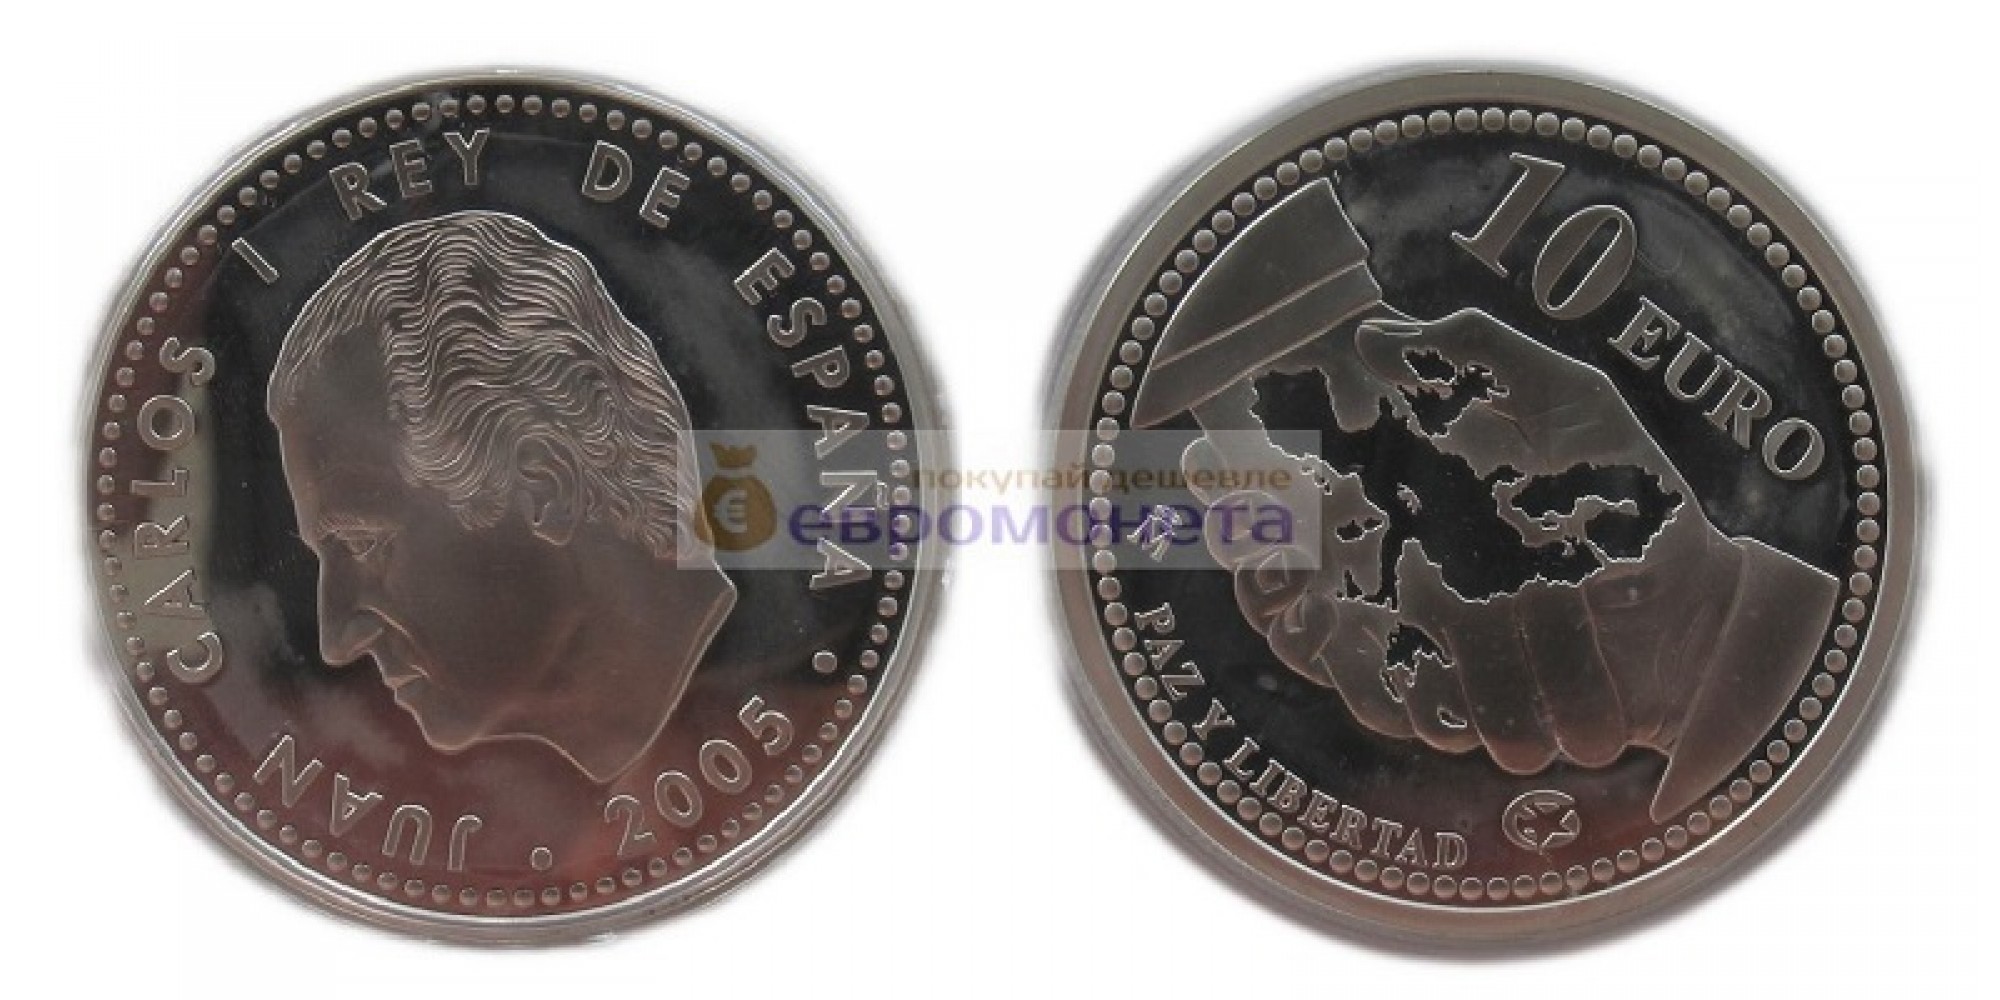 Испания 10 евро 2005 год. 60 лет миру и свободе в Европе. Серебро. Пруф (Proof )